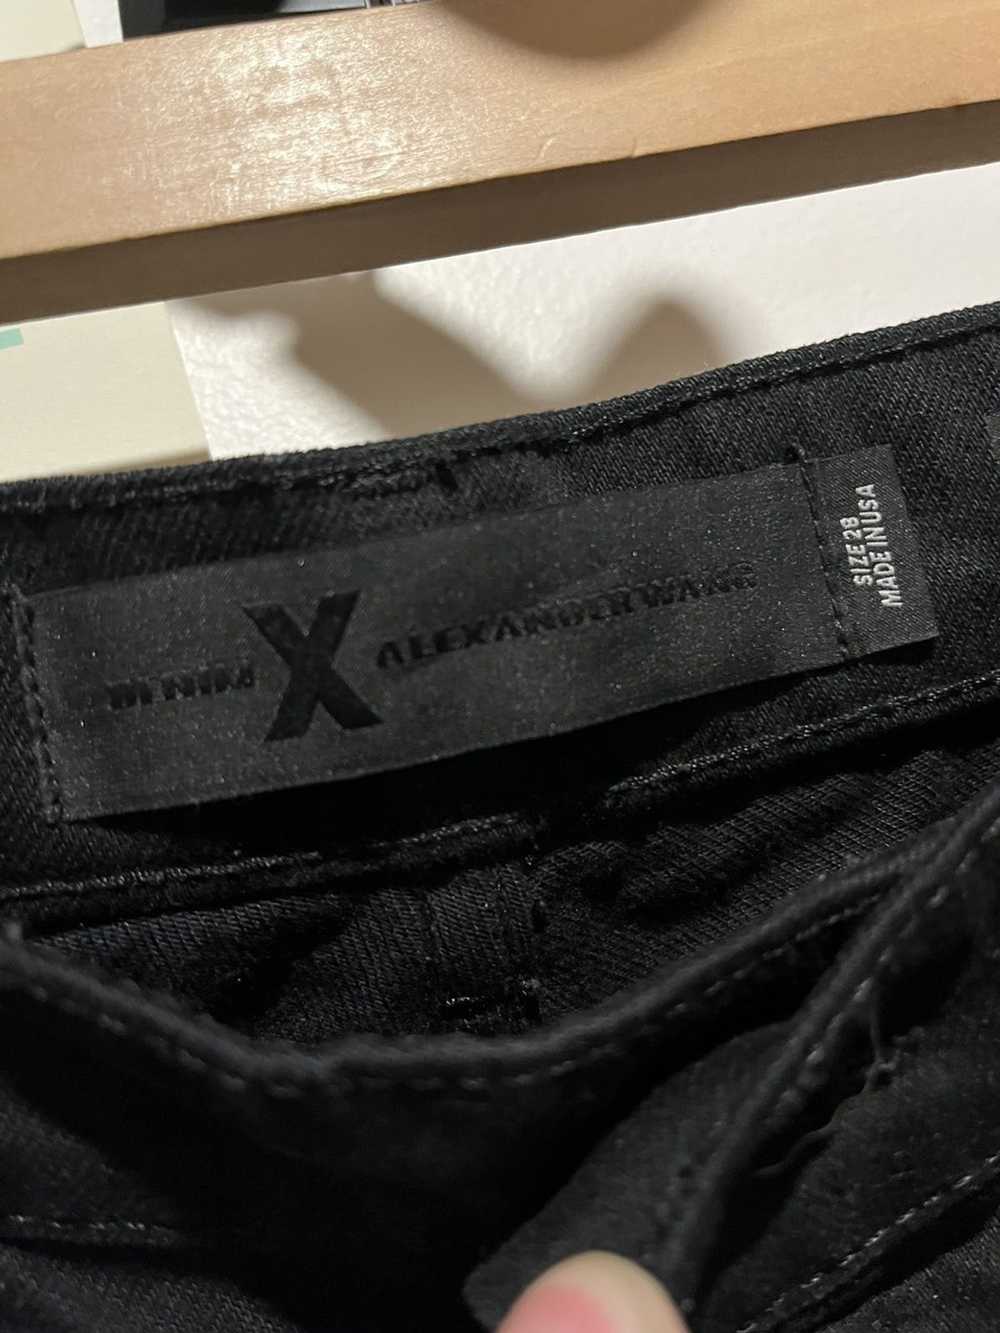 BLACKPINK - Jennie Airport Fashion List: LV Supreme (Printed Tee) $450;  Alexander Wang (High Waisted Army Pants…